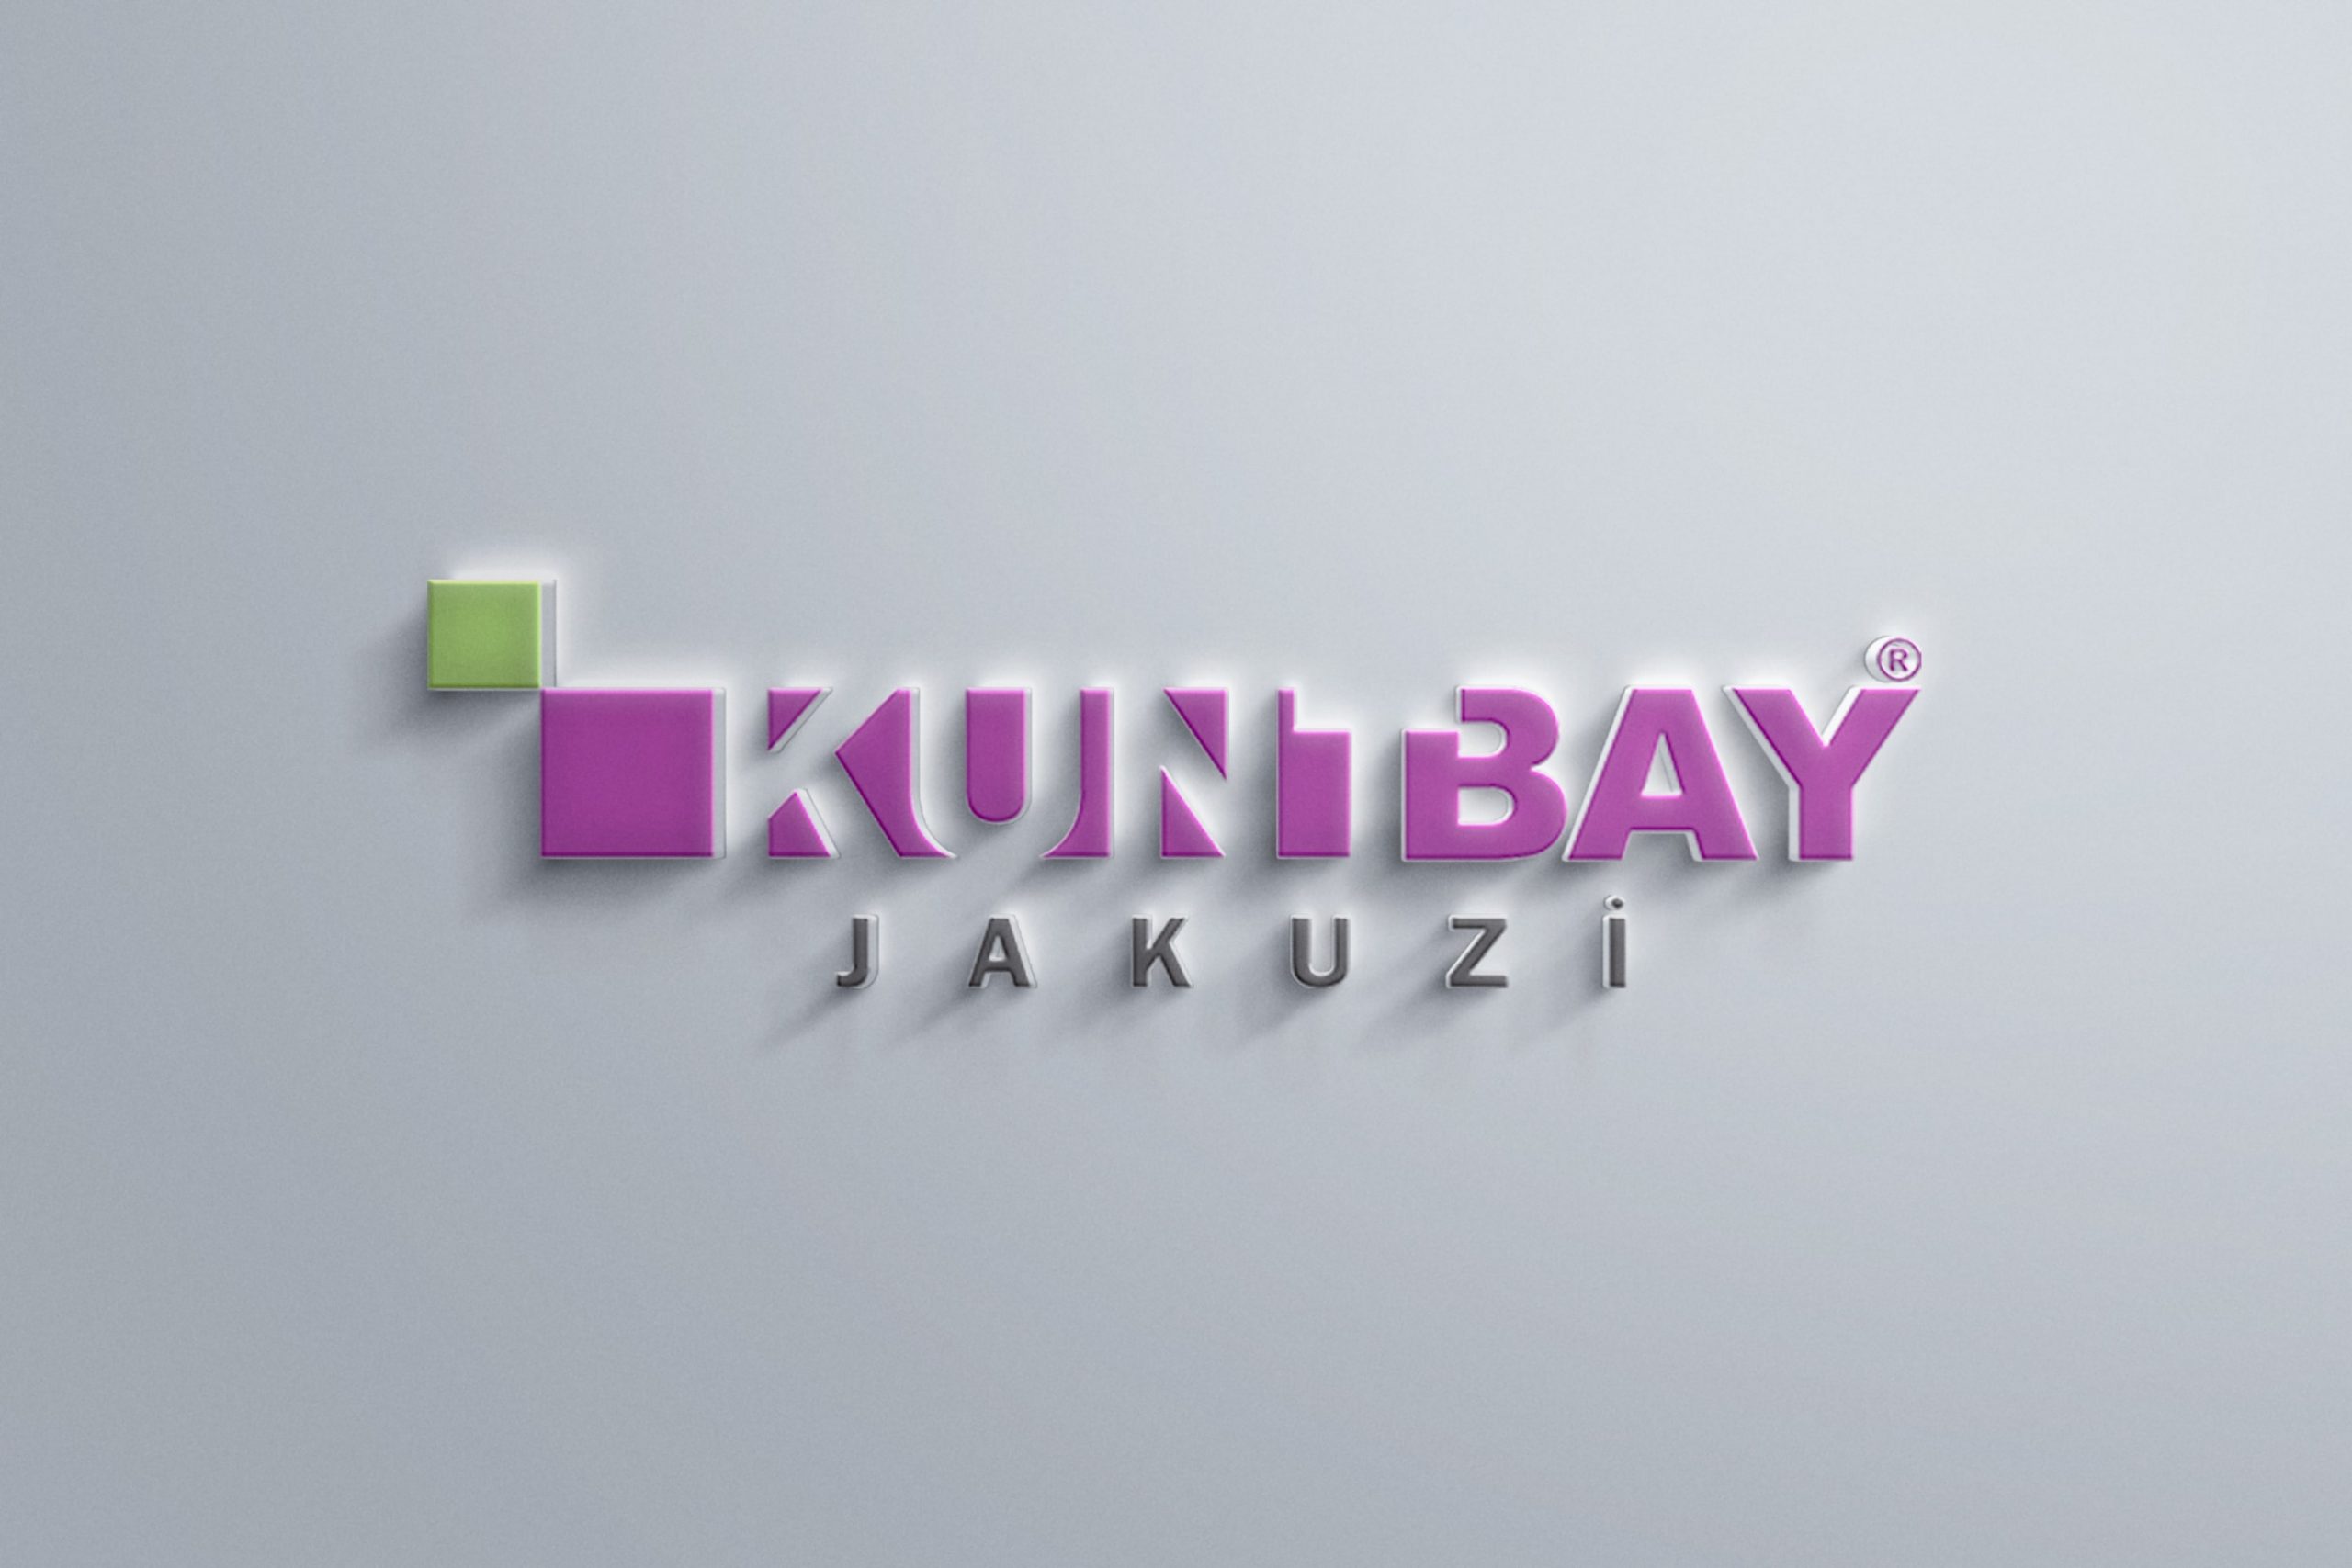 Kuntbay Jakuzi